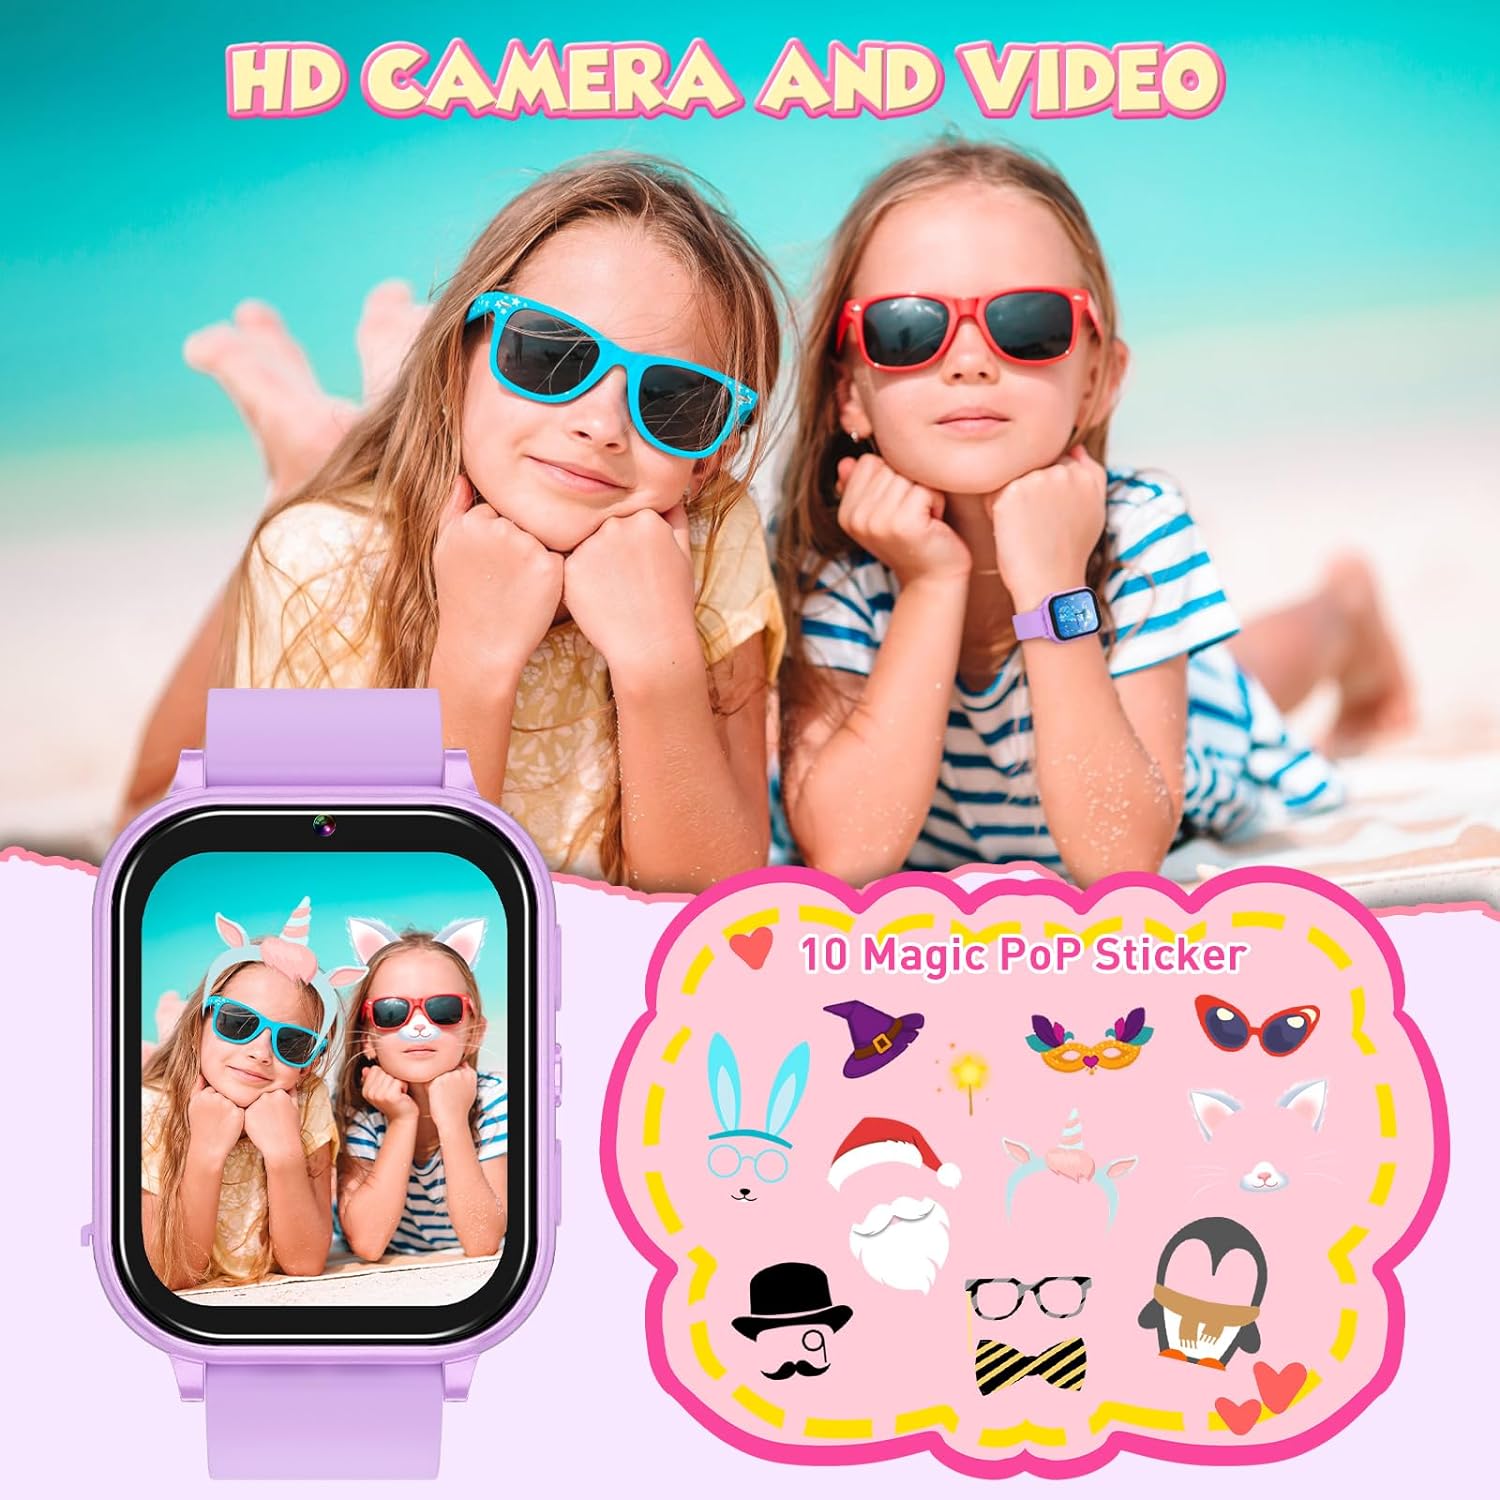 Hepoasky Kids Smart Watches Girls Boys Toys Gift for Girls Boys Toys for 4 5 6 7 8 9 10 11 12 Year Old Girls Birthday Gift Purple